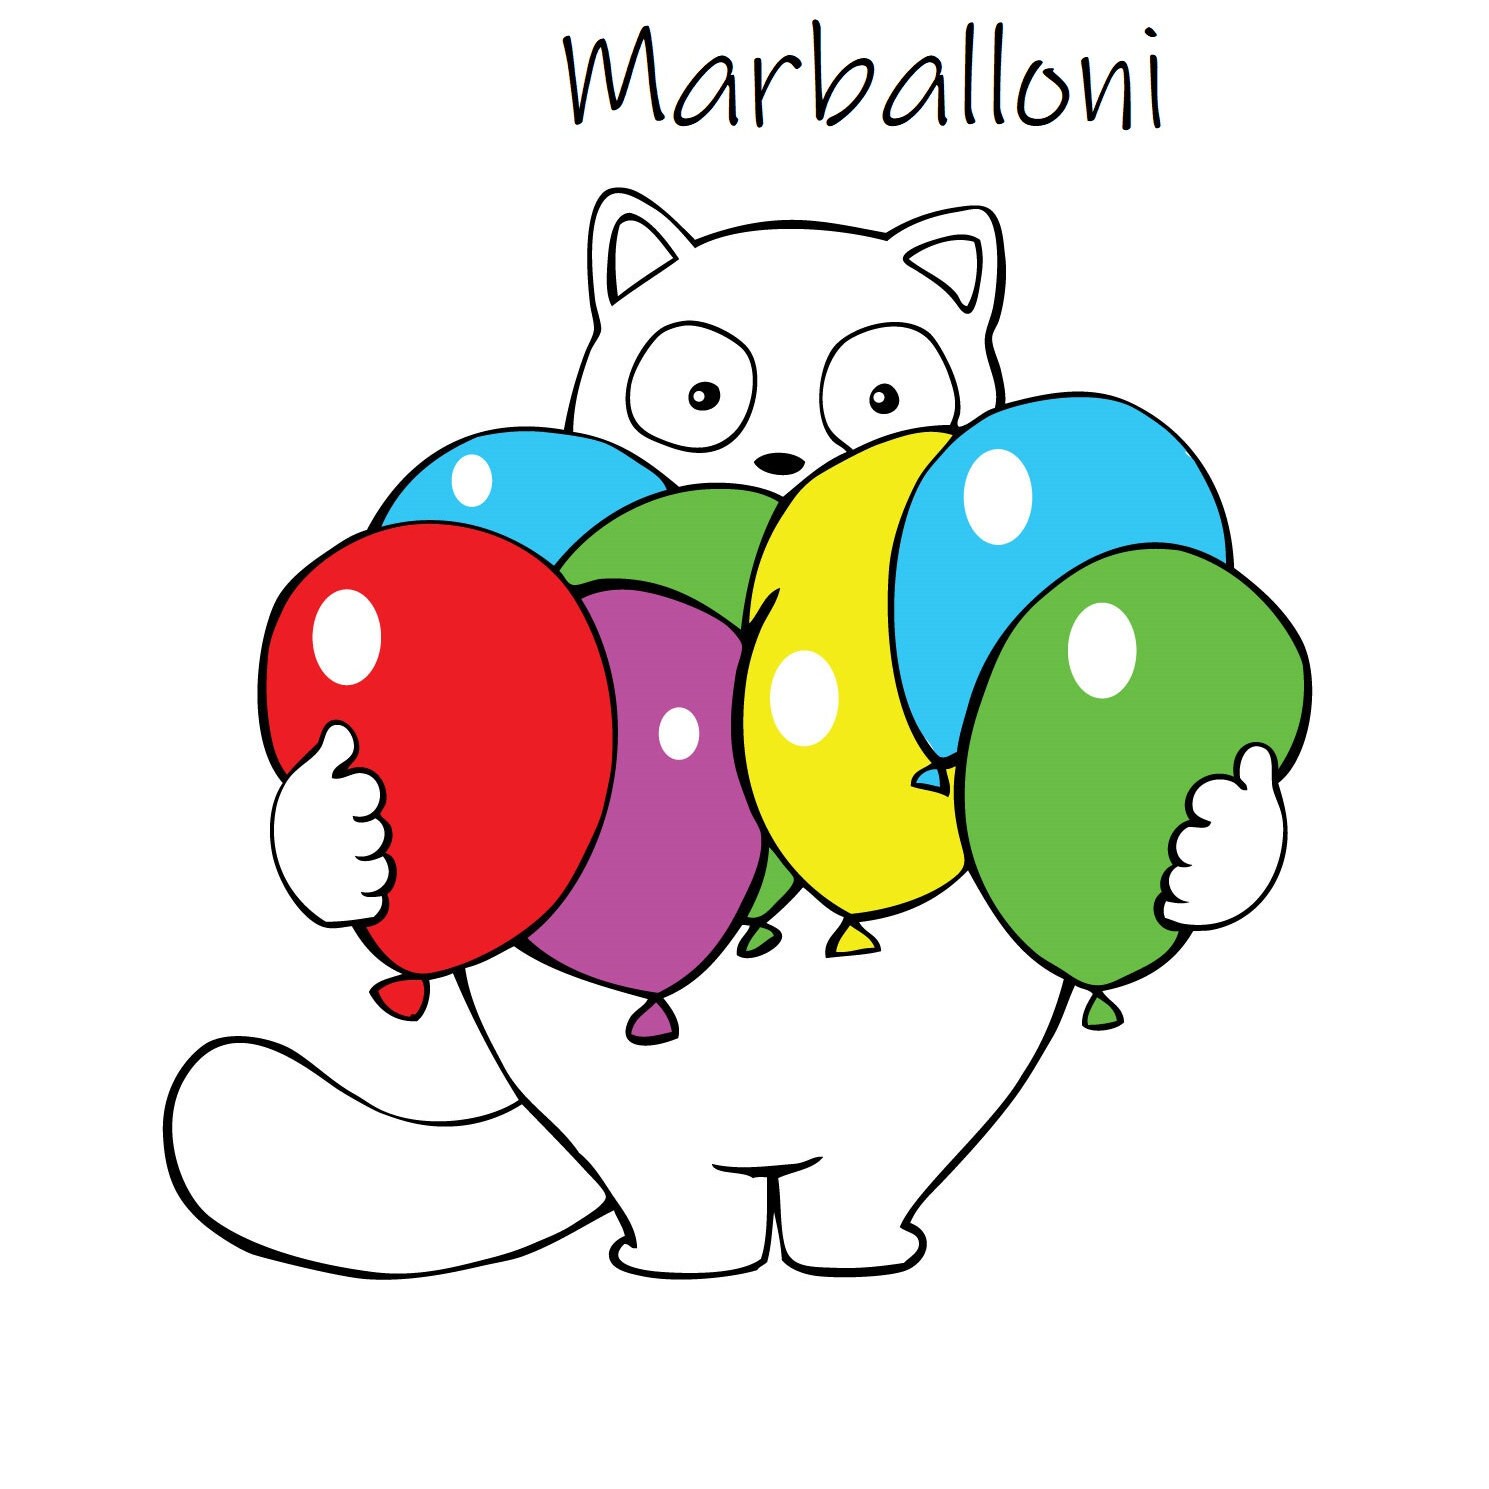 masha #orso #palloncini #puglia #mashaeorso #mashaandthebear #balloons  #birthday #party #fun